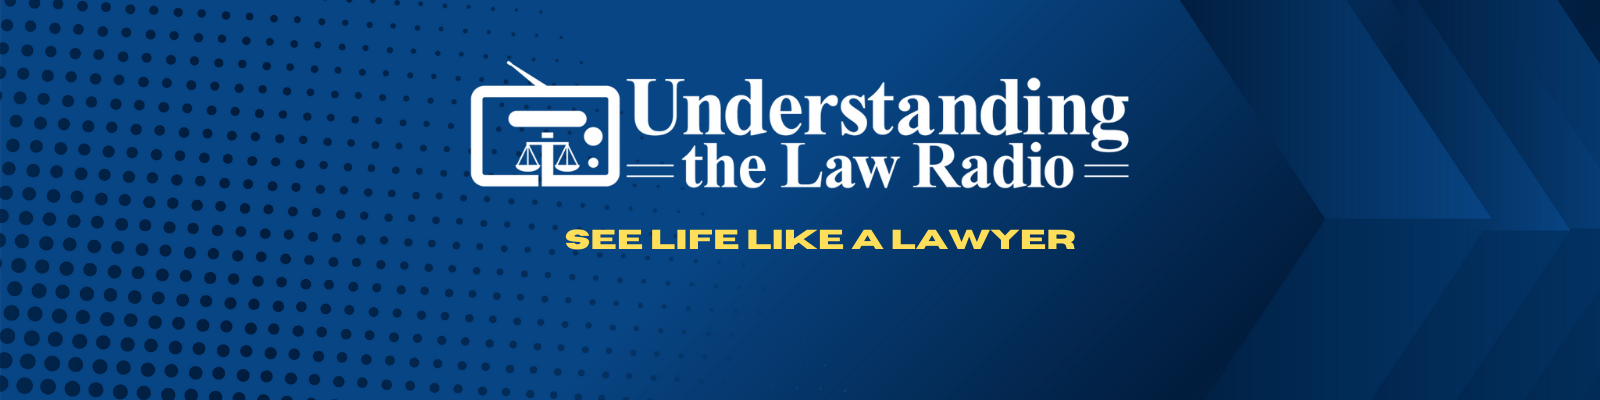 Understanding the Law Radio (UTLRadio)